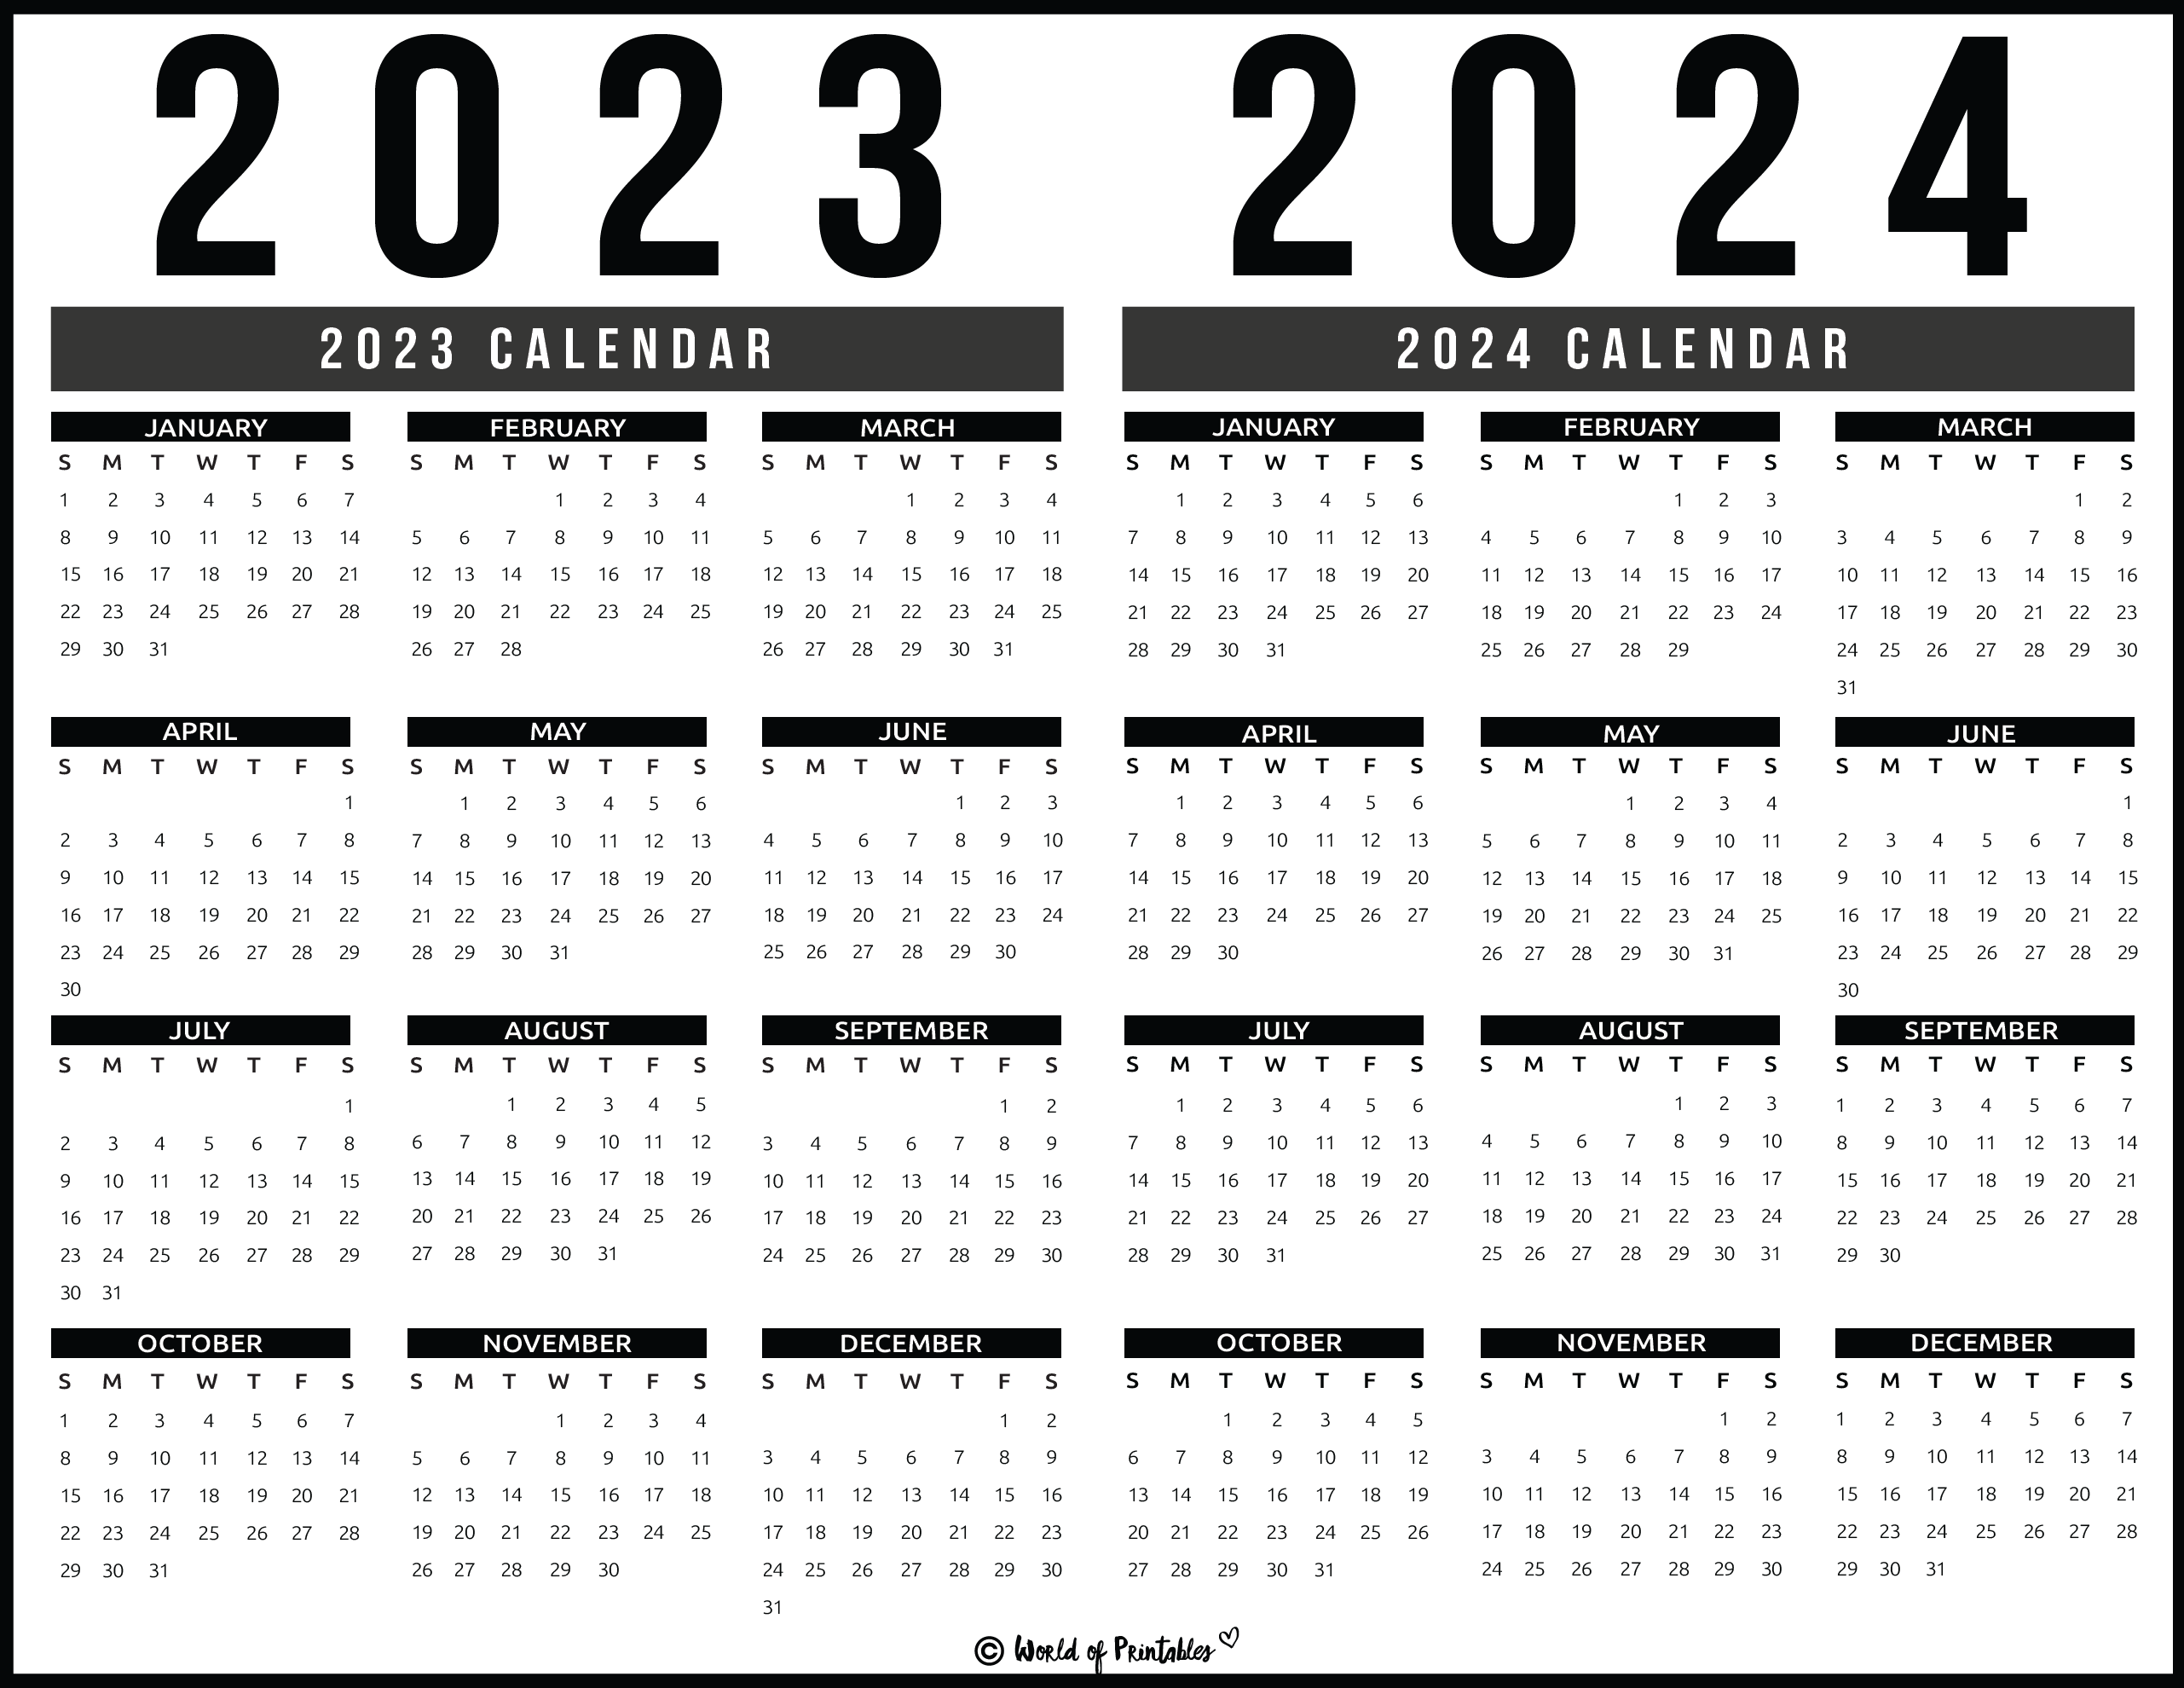 2023 2024 Calendar Free Printables - World Of Printables for 2023 Calendar 2024 Printable